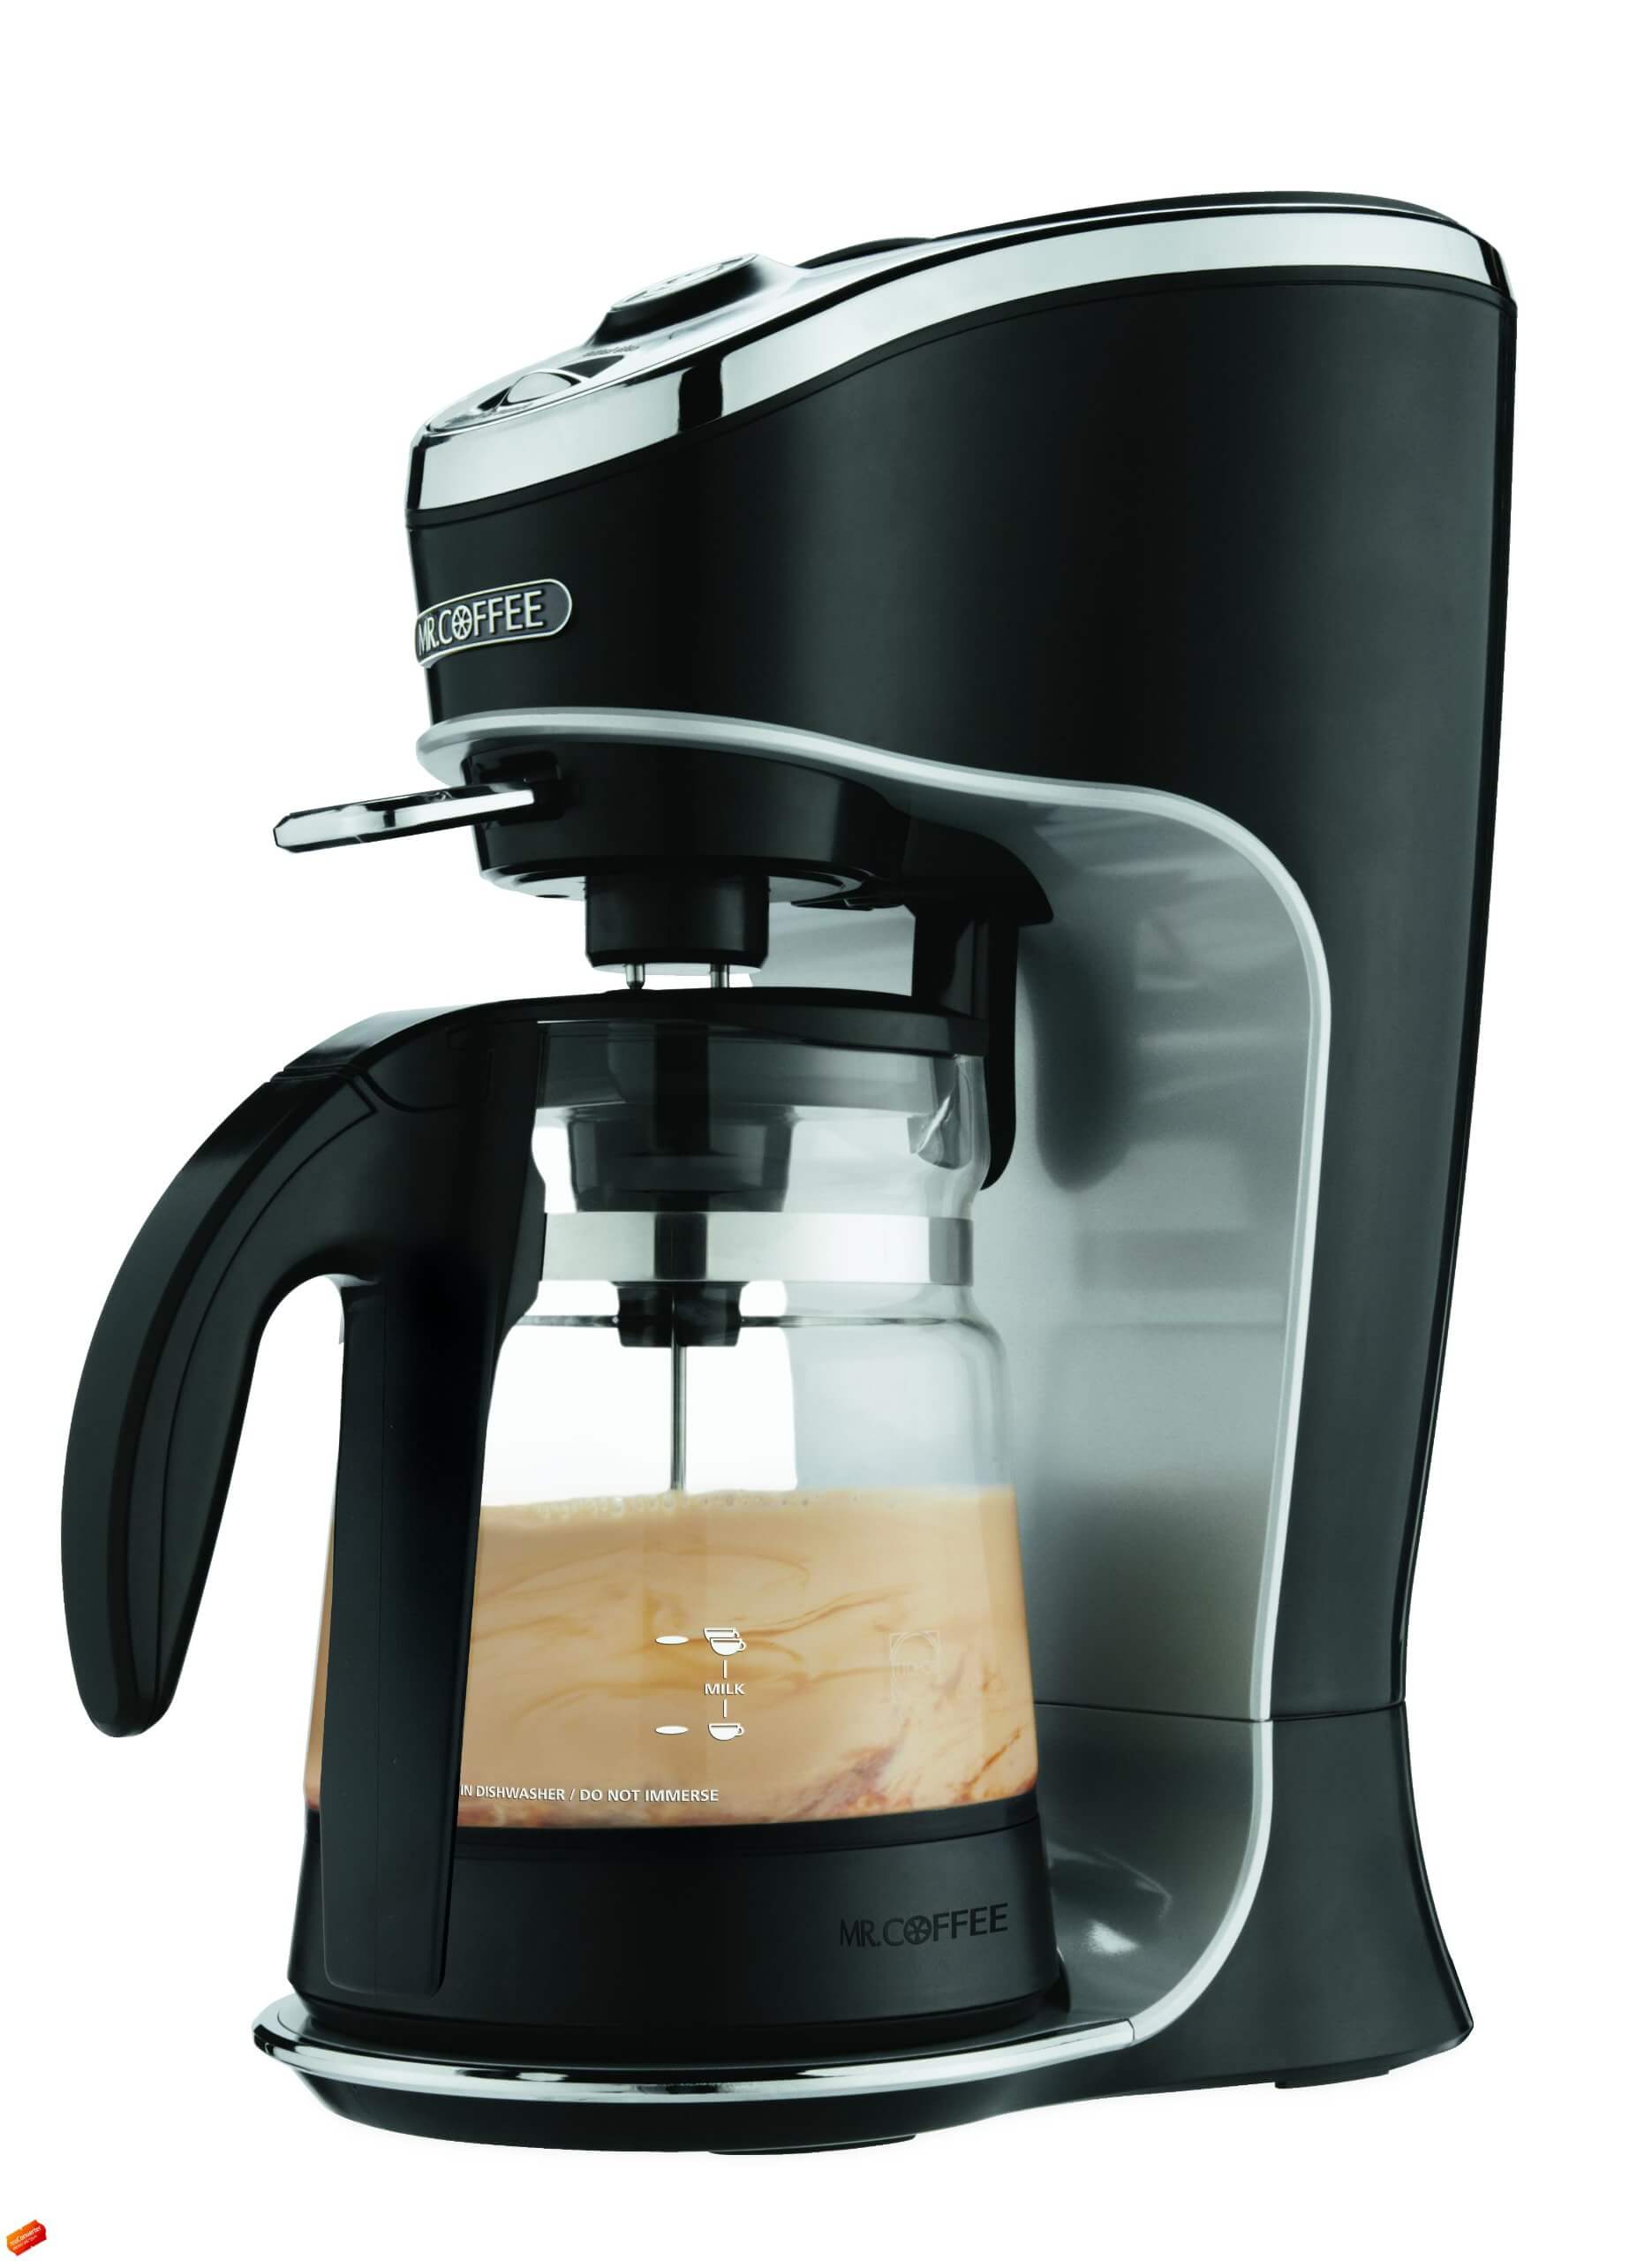 Mr. Coffee Cafe Latte Maker, best home latte machine 2020, best latte machine